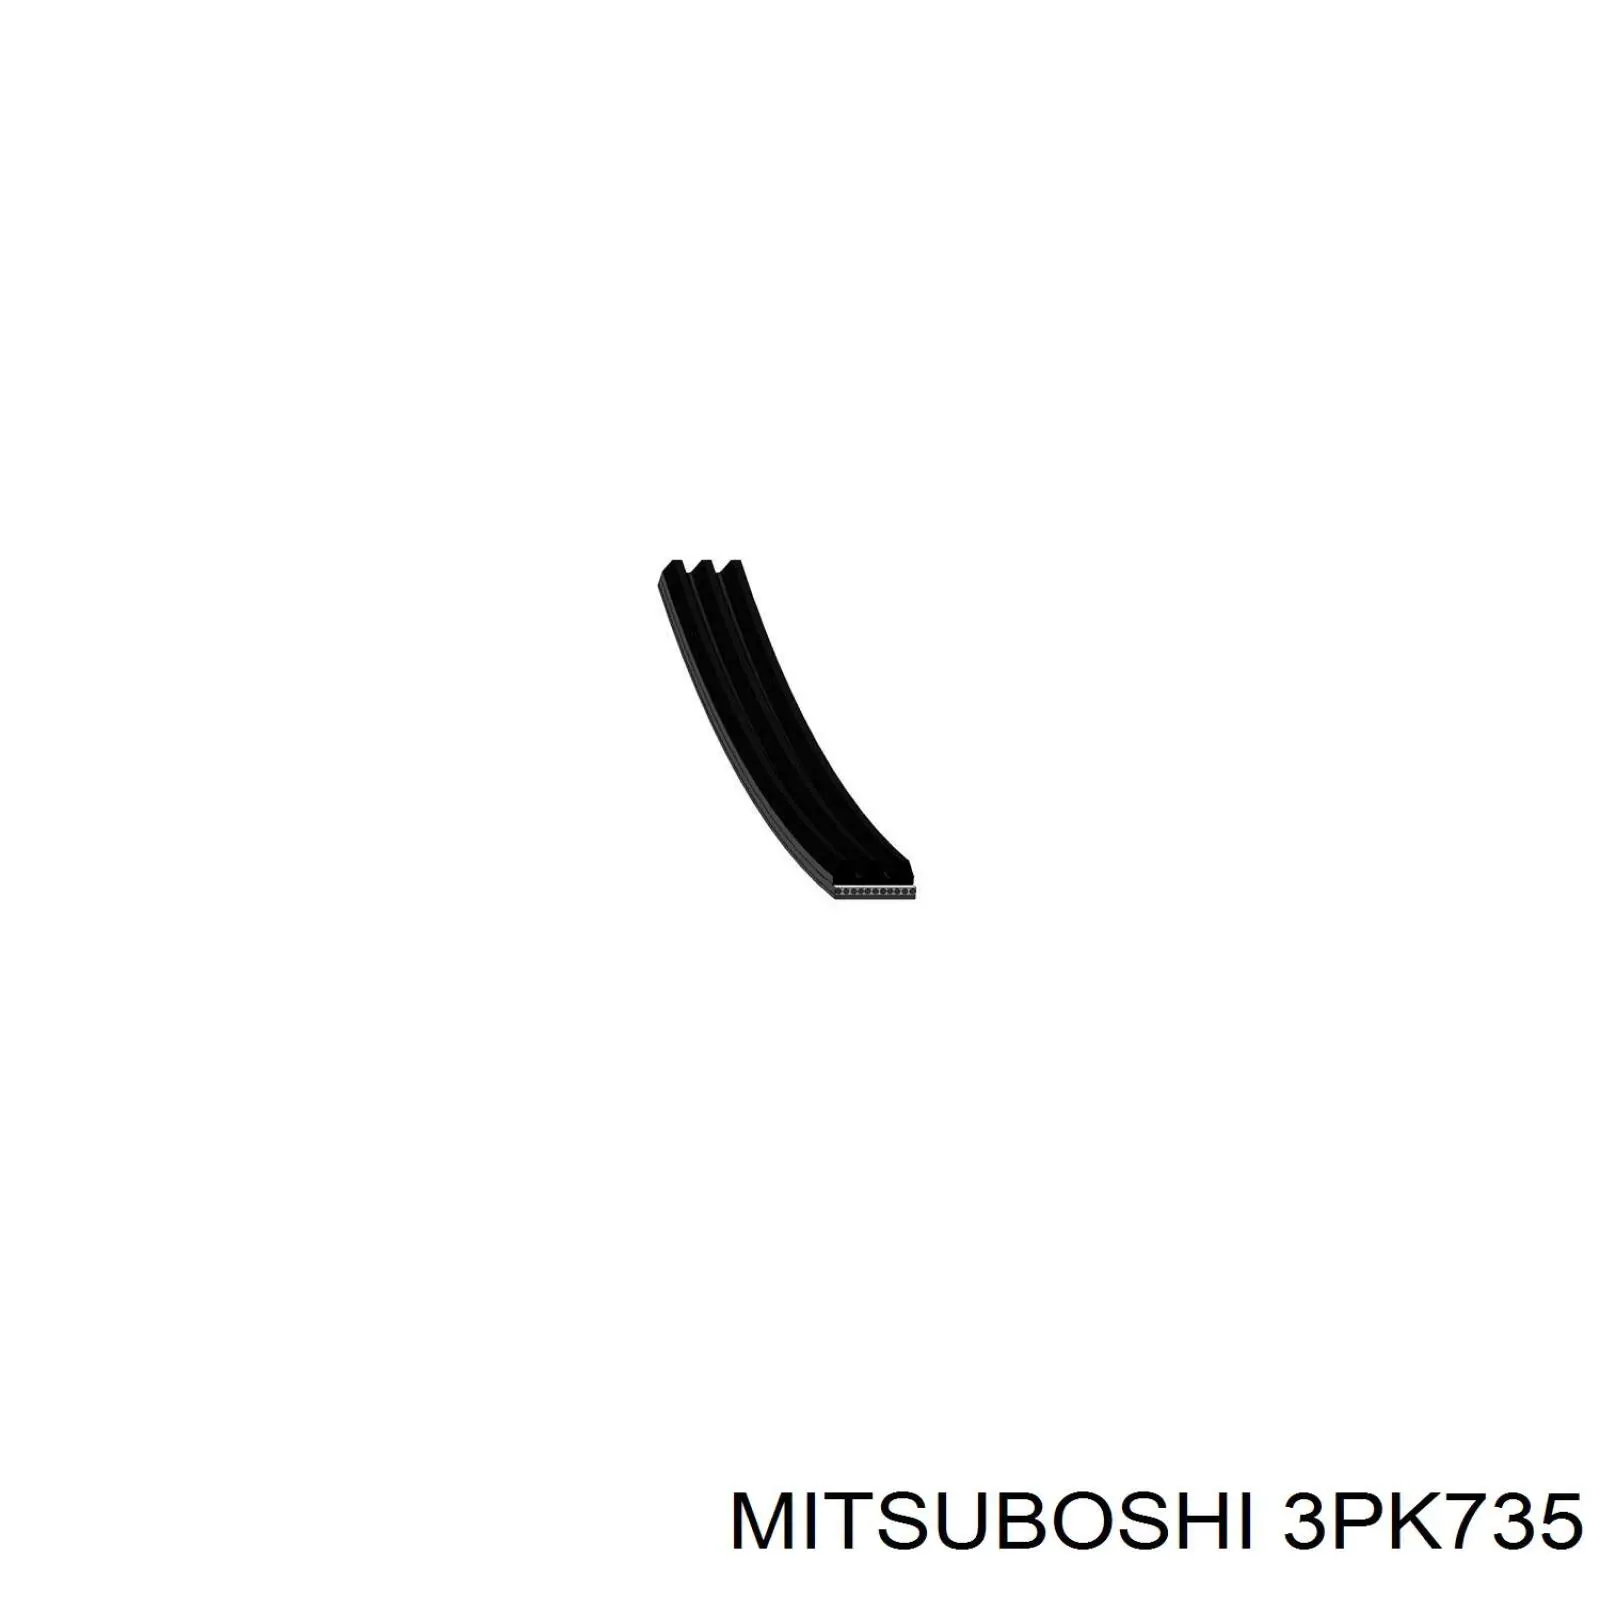 3PK735 Mitsuboshi ремень генератора